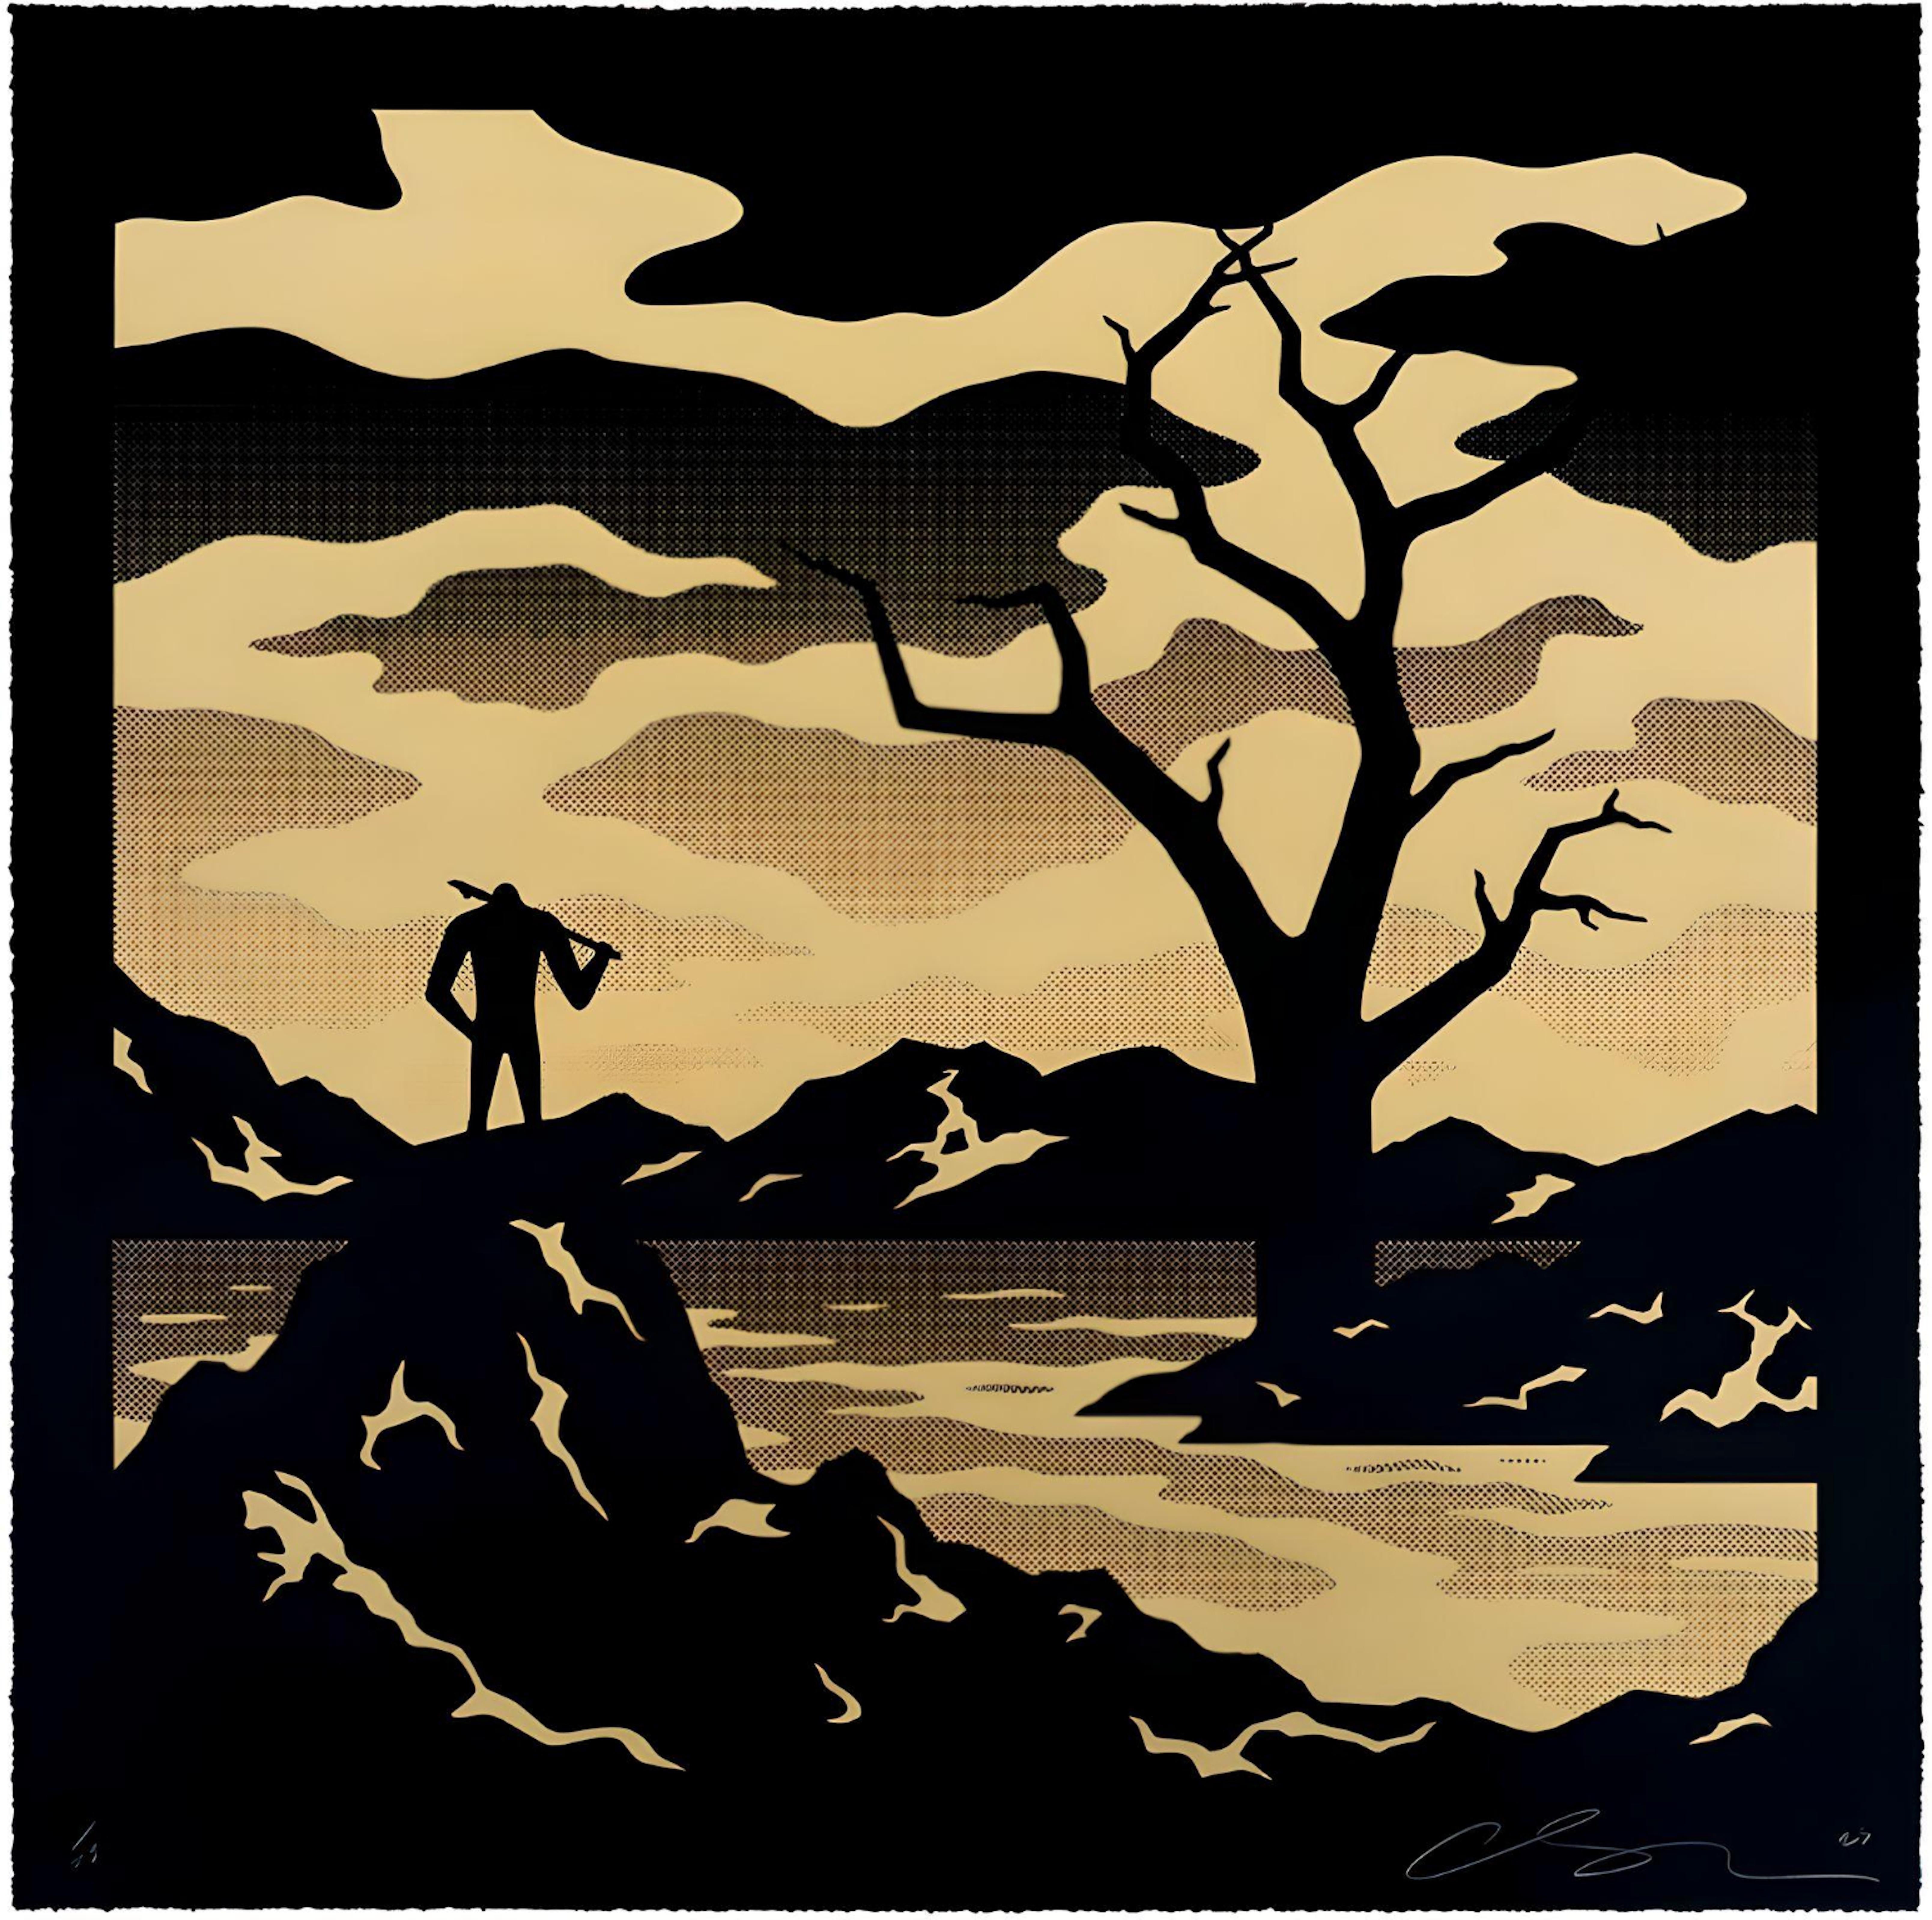 Cleon Peterson Landscape Print - Promised Land (Night)